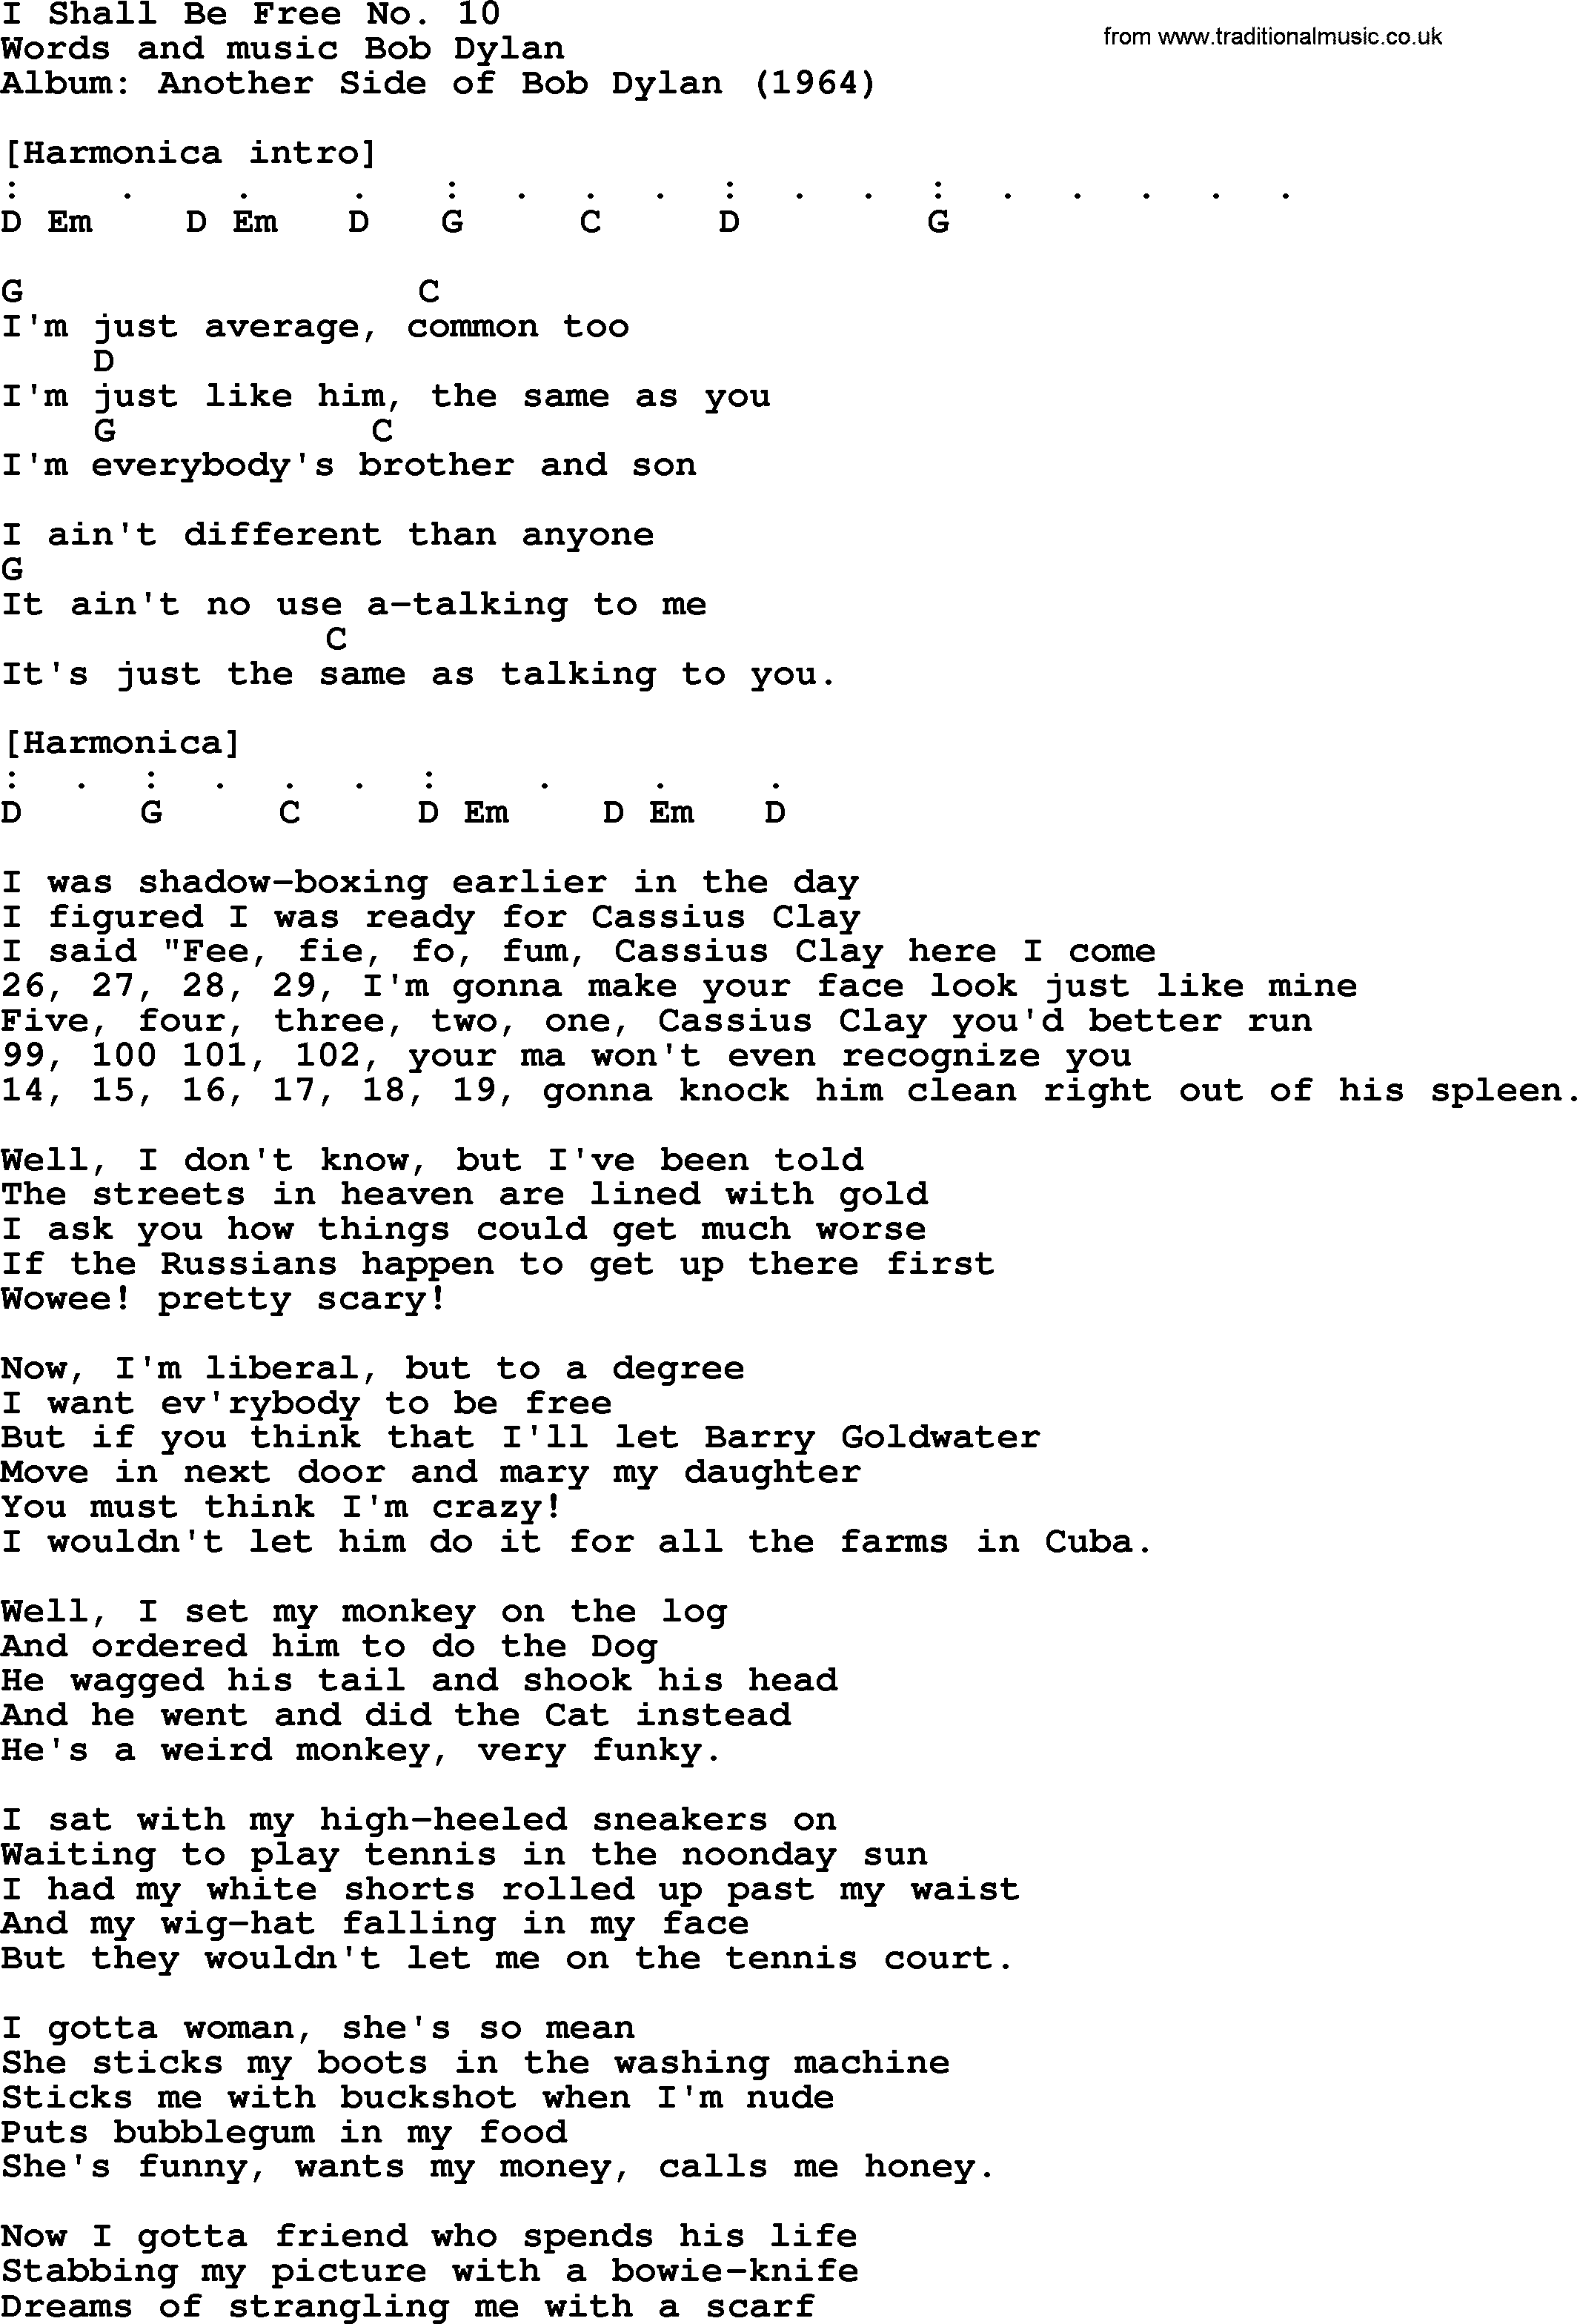 Bob Dylan song, lyrics with chords - I Shall Be Free No. 10